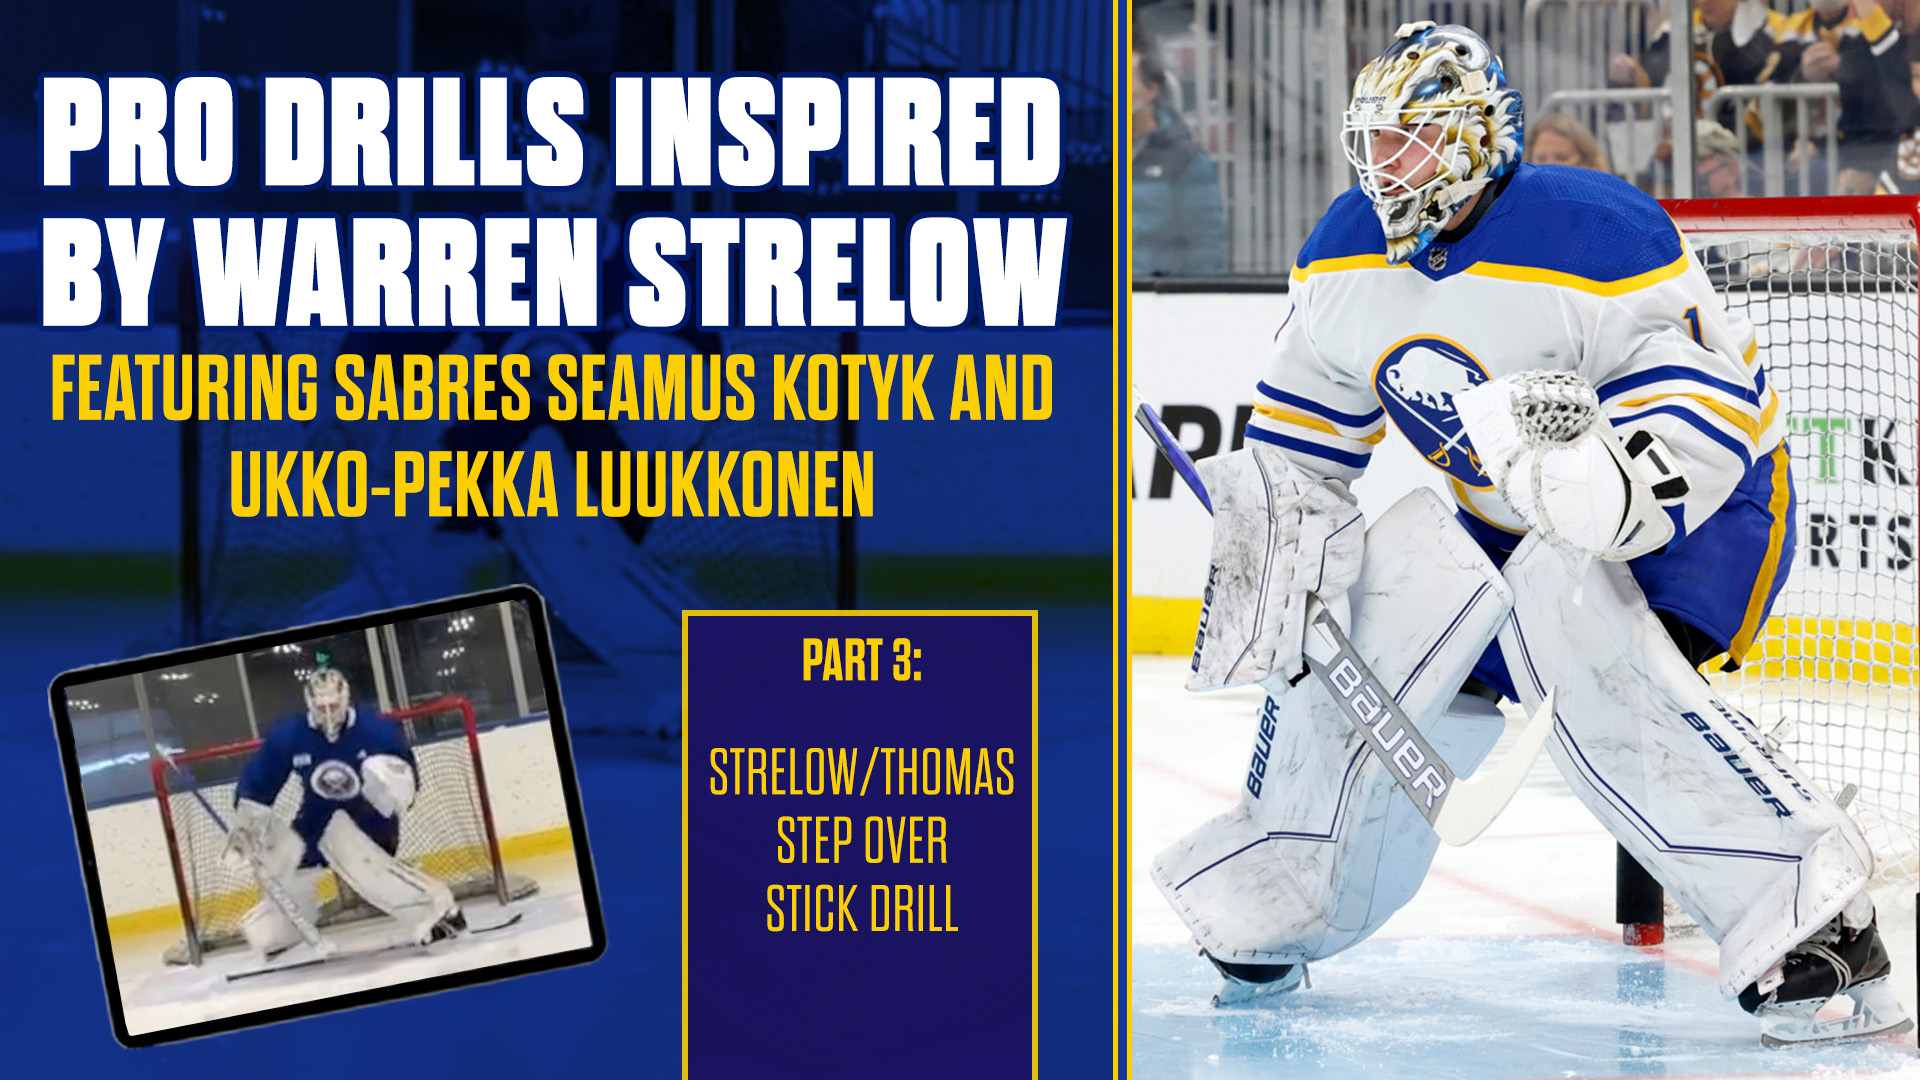 Pro Drills inspired by Warren Strelow Featuring Sabres Seamus Kotyk and Ukko-Pekka Luukkonen